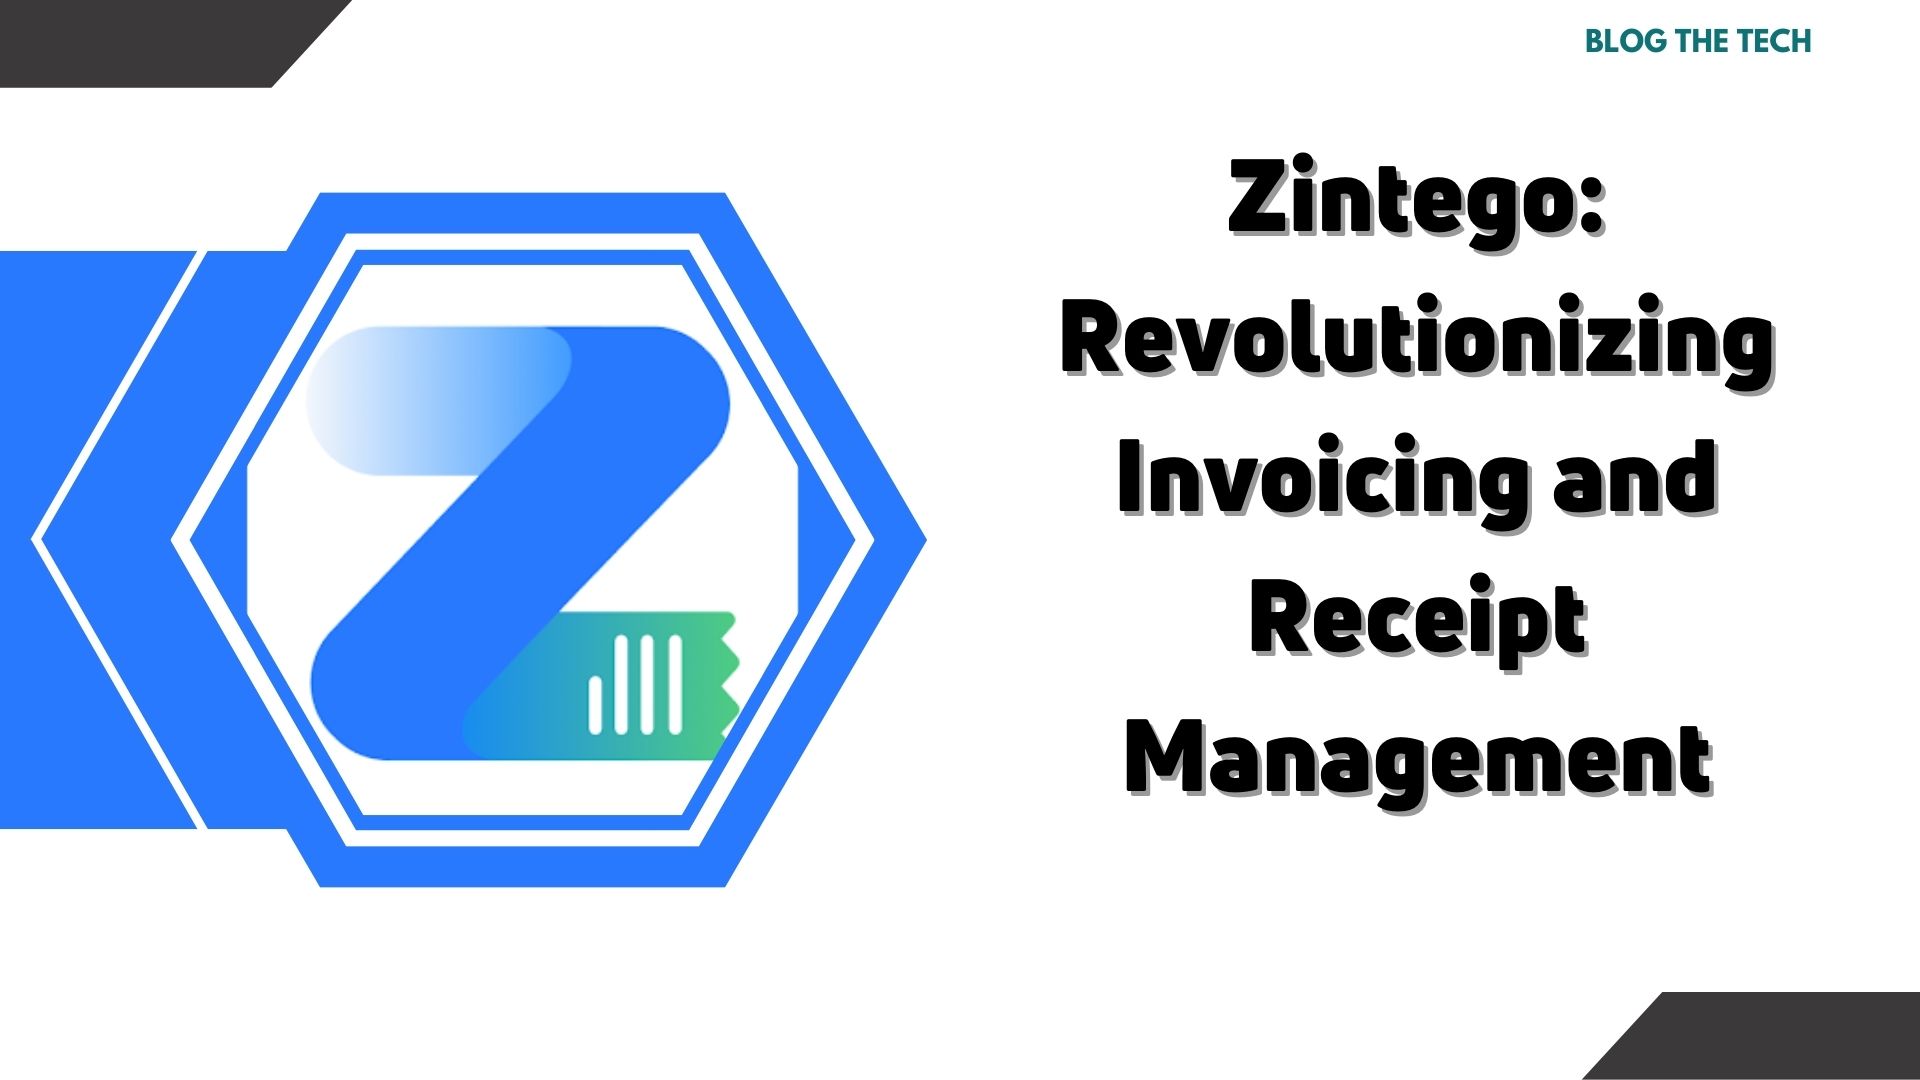 Zintego: Revolutionizing Invoicing and Receipt Management